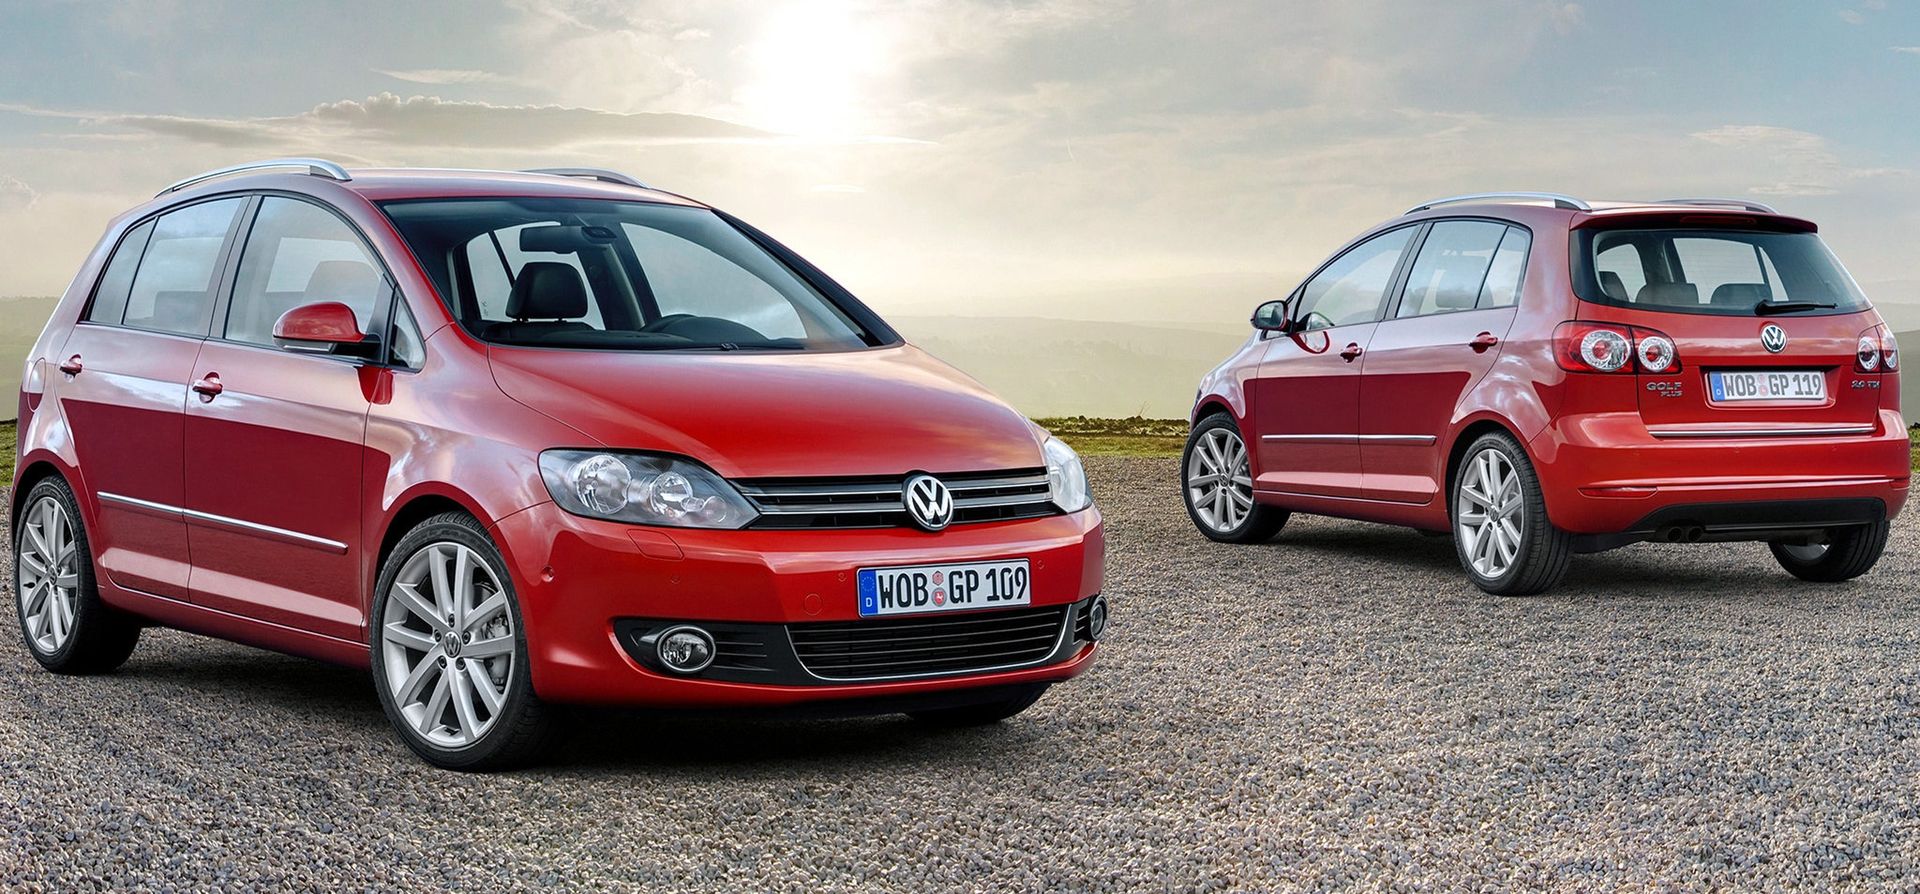 Używane: Ford C-Max, Opel Meriva A I Volkswagen Golf Plus. Który Najlepszy? | Autokult.pl